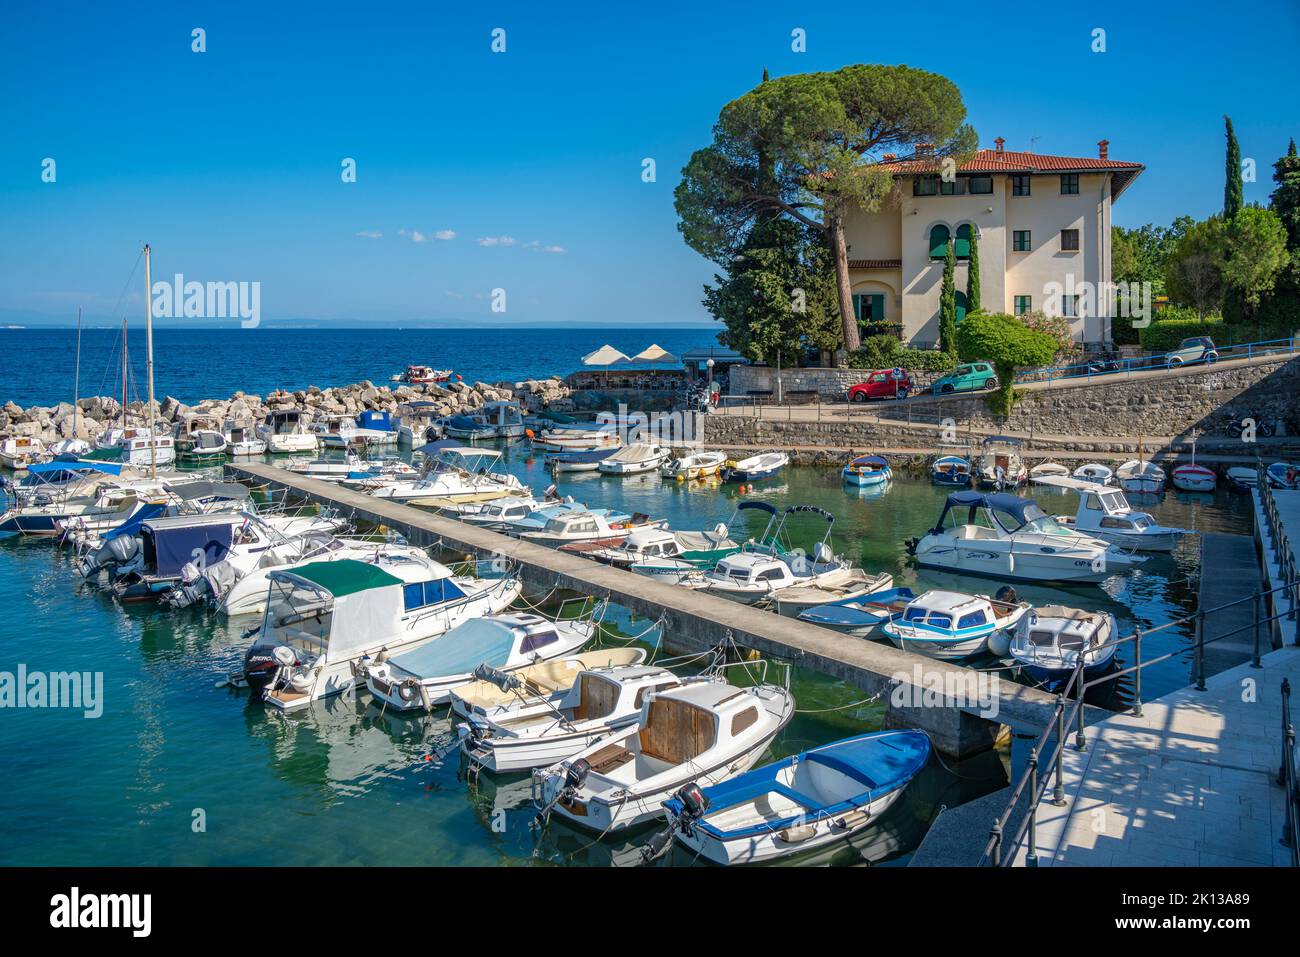 View of boats in the marina and Adriatic Sea at Icici, Icici, Kvarner Bay, Croatia, Europe Stock Photo